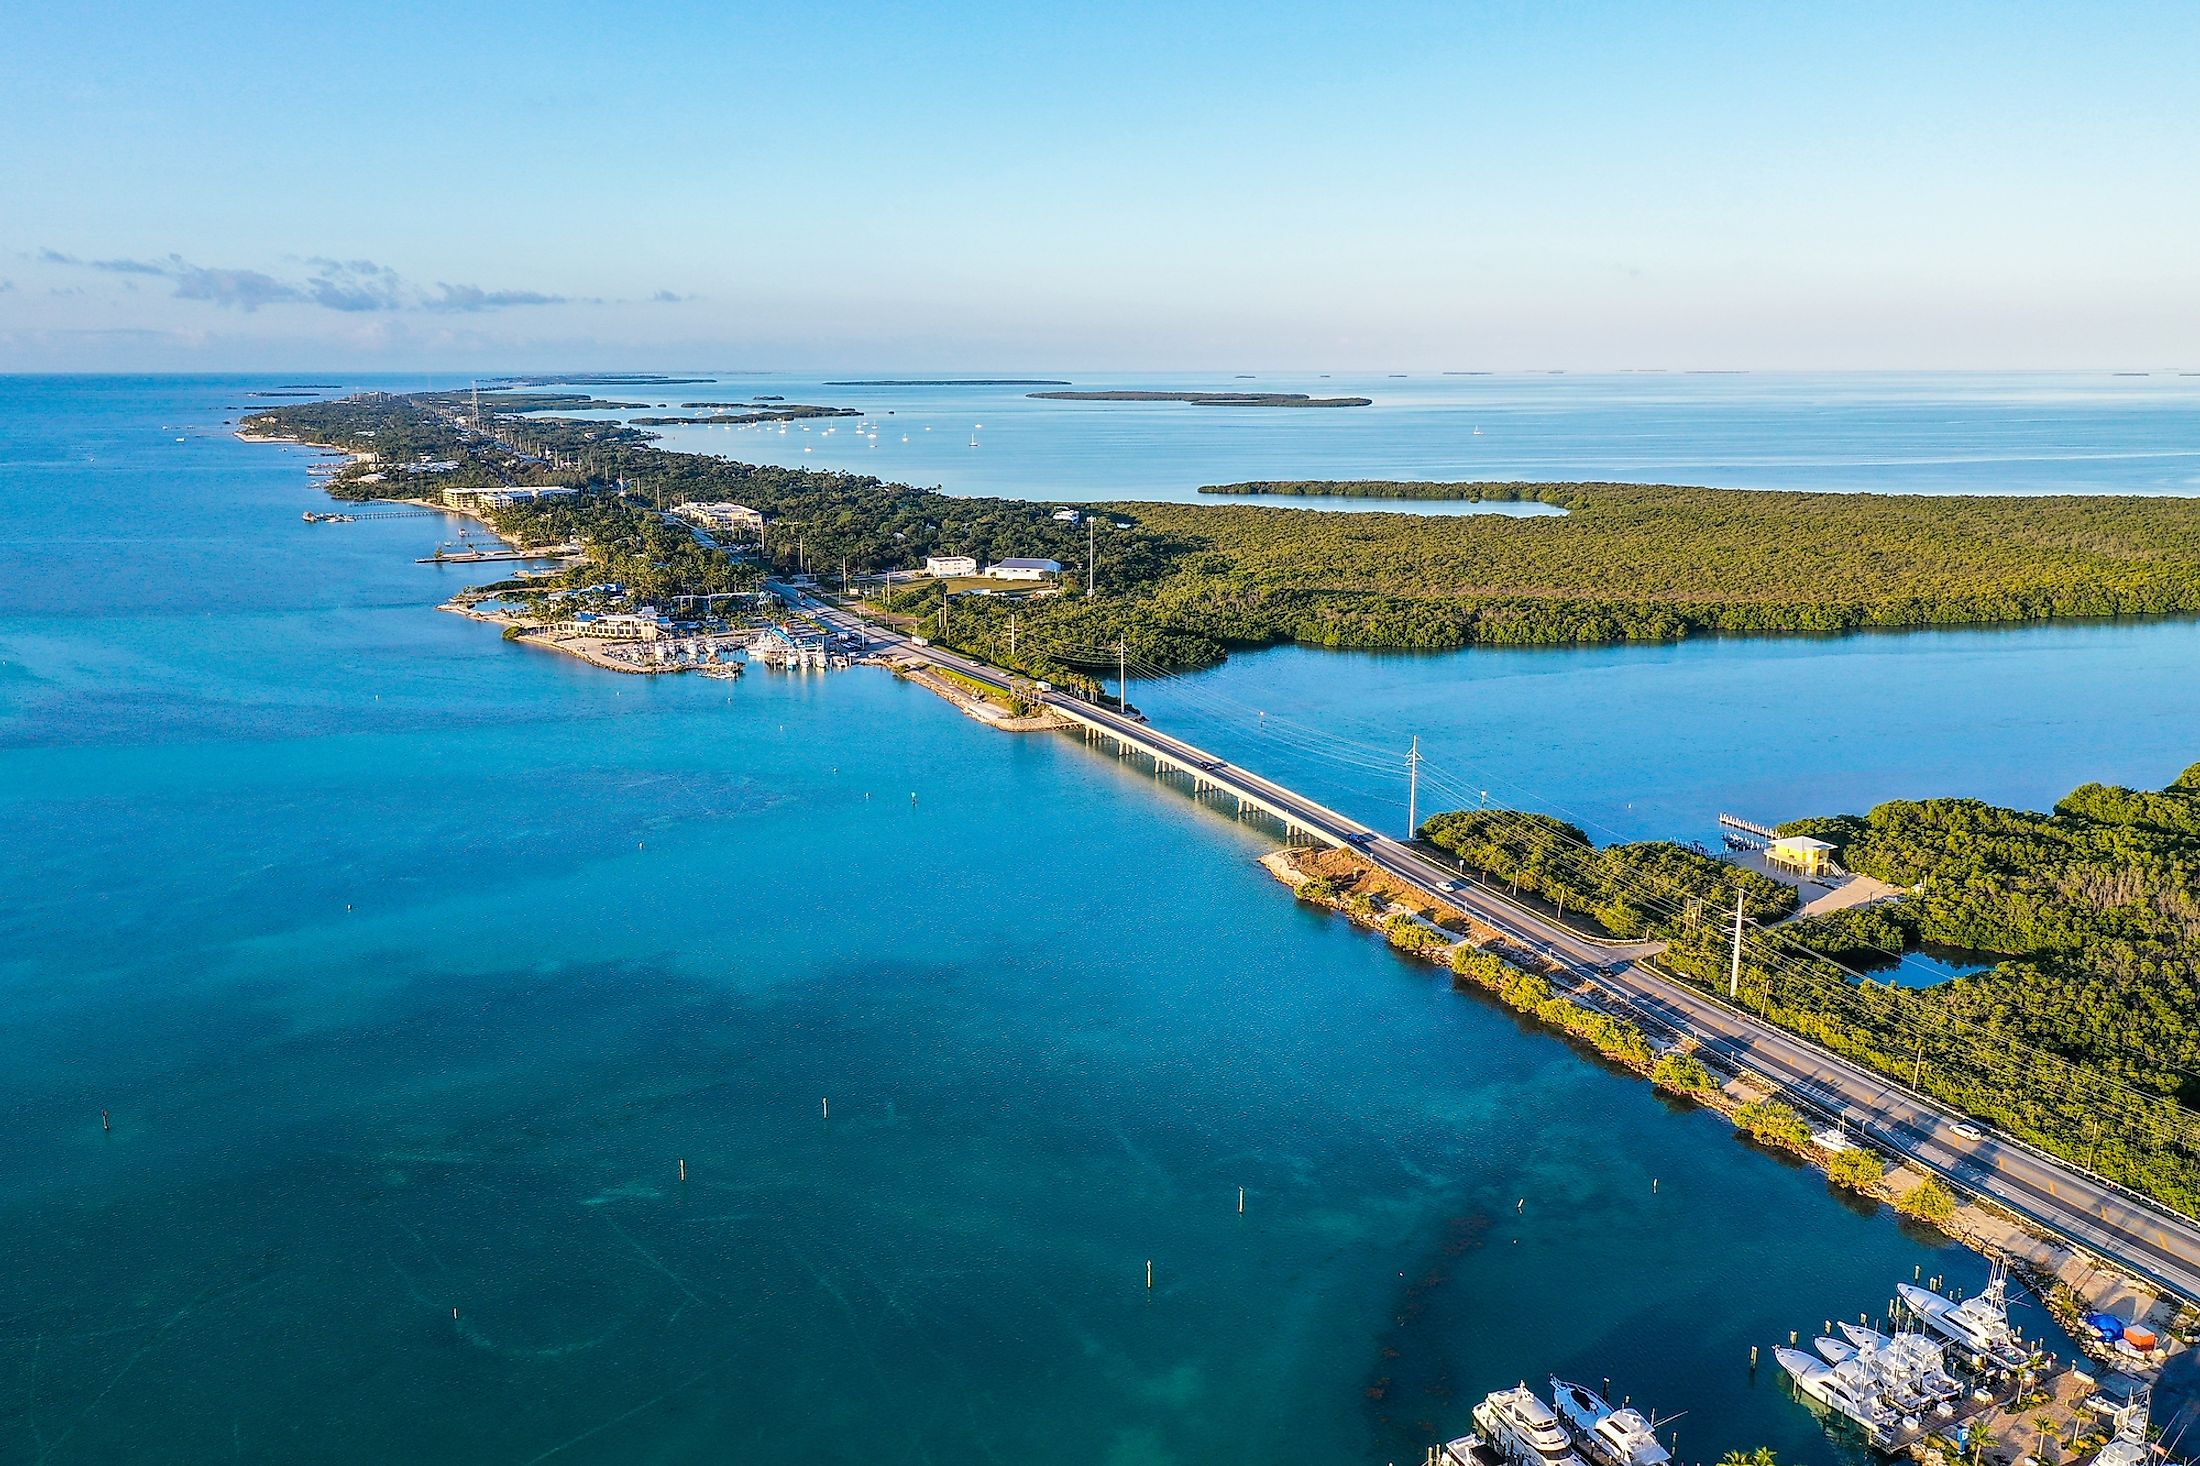 The Florida Keys along the Florida Strait